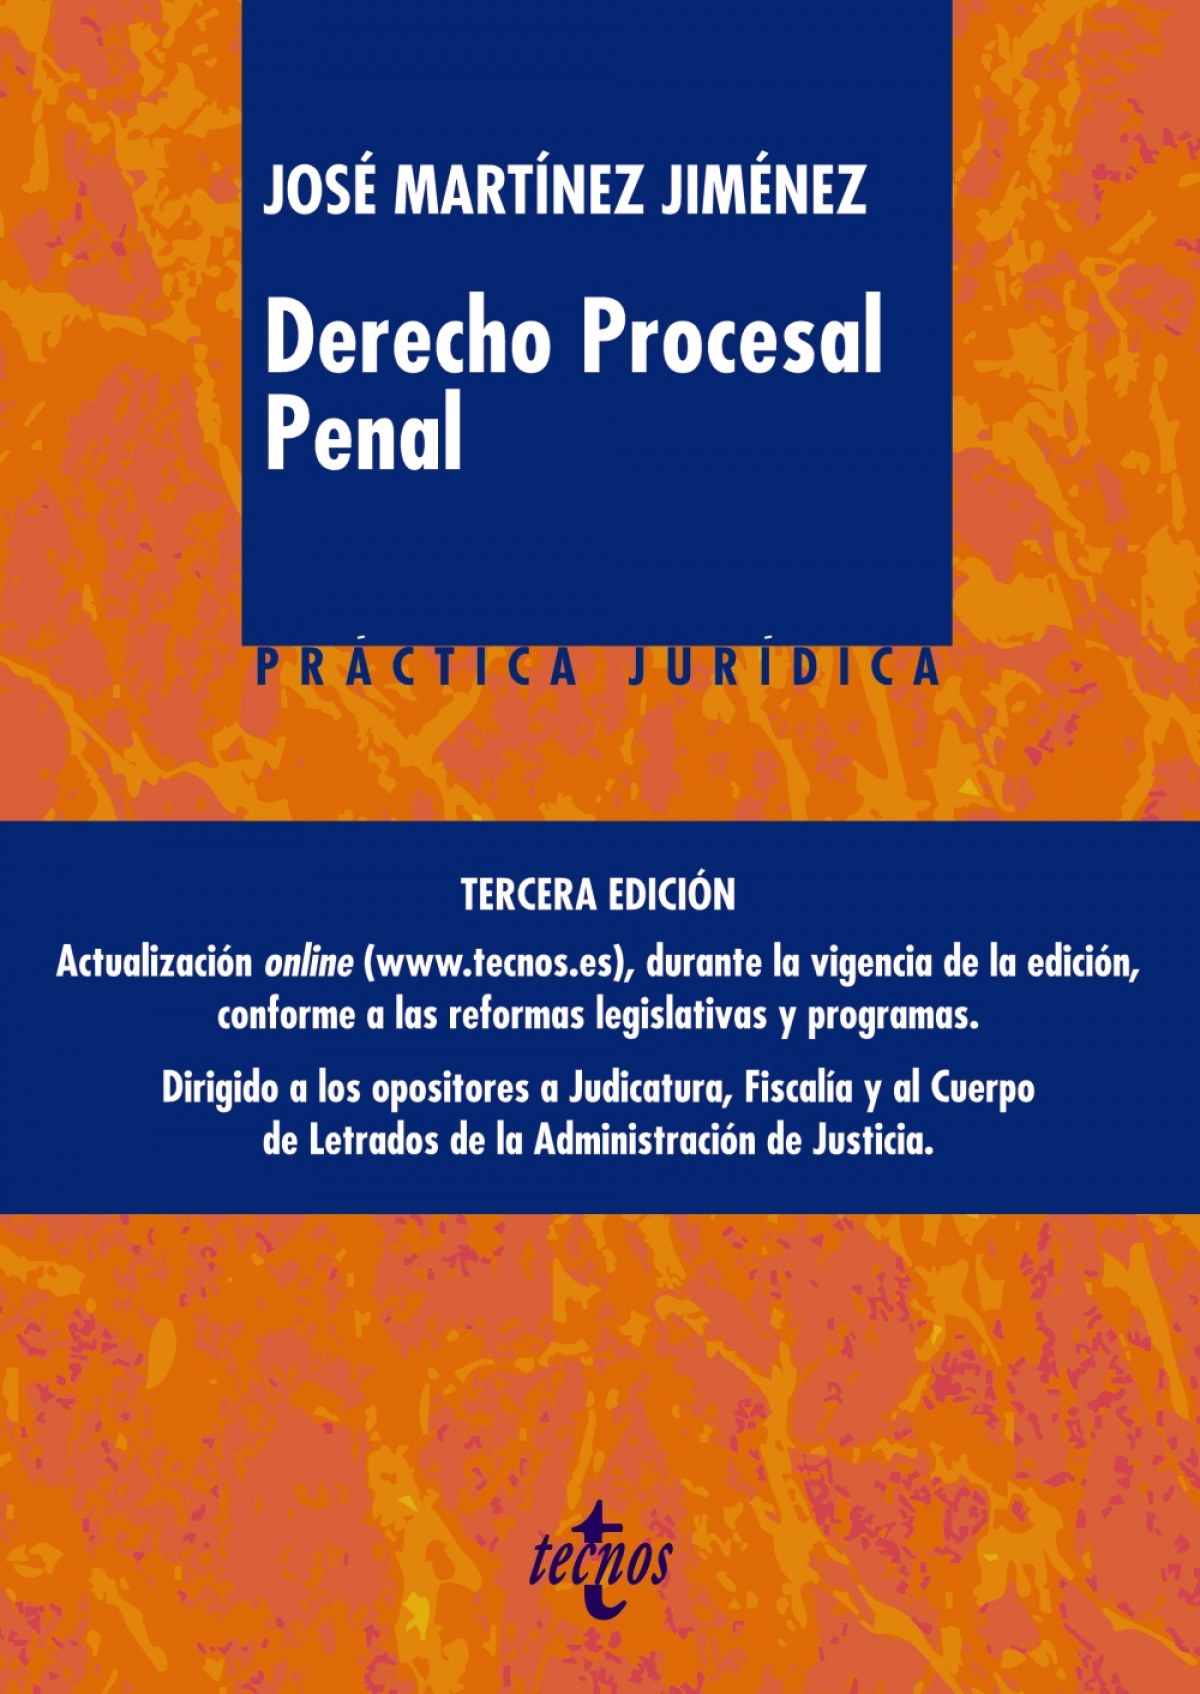 Derecho procesal penal 2019 - Martínez Jiménez, José